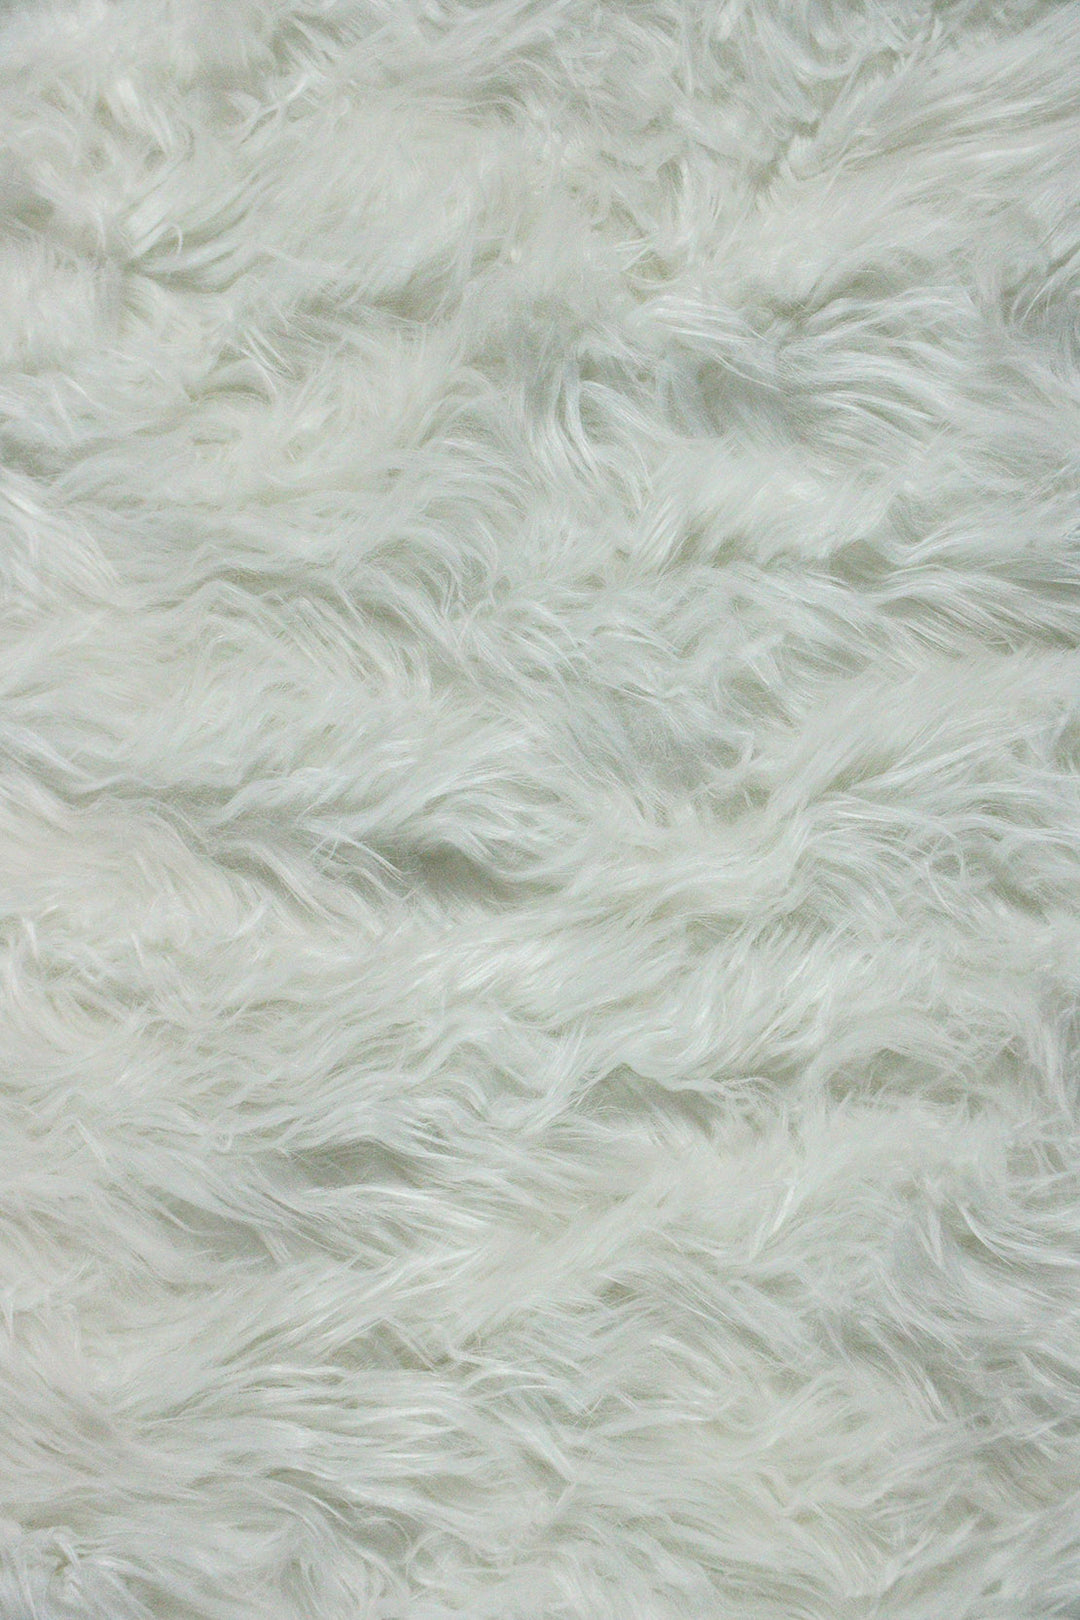 Wild Life (Sheep Fur) - 3.9 x 5.5 FT - White - Luxuriously Soft Fluffy Rug